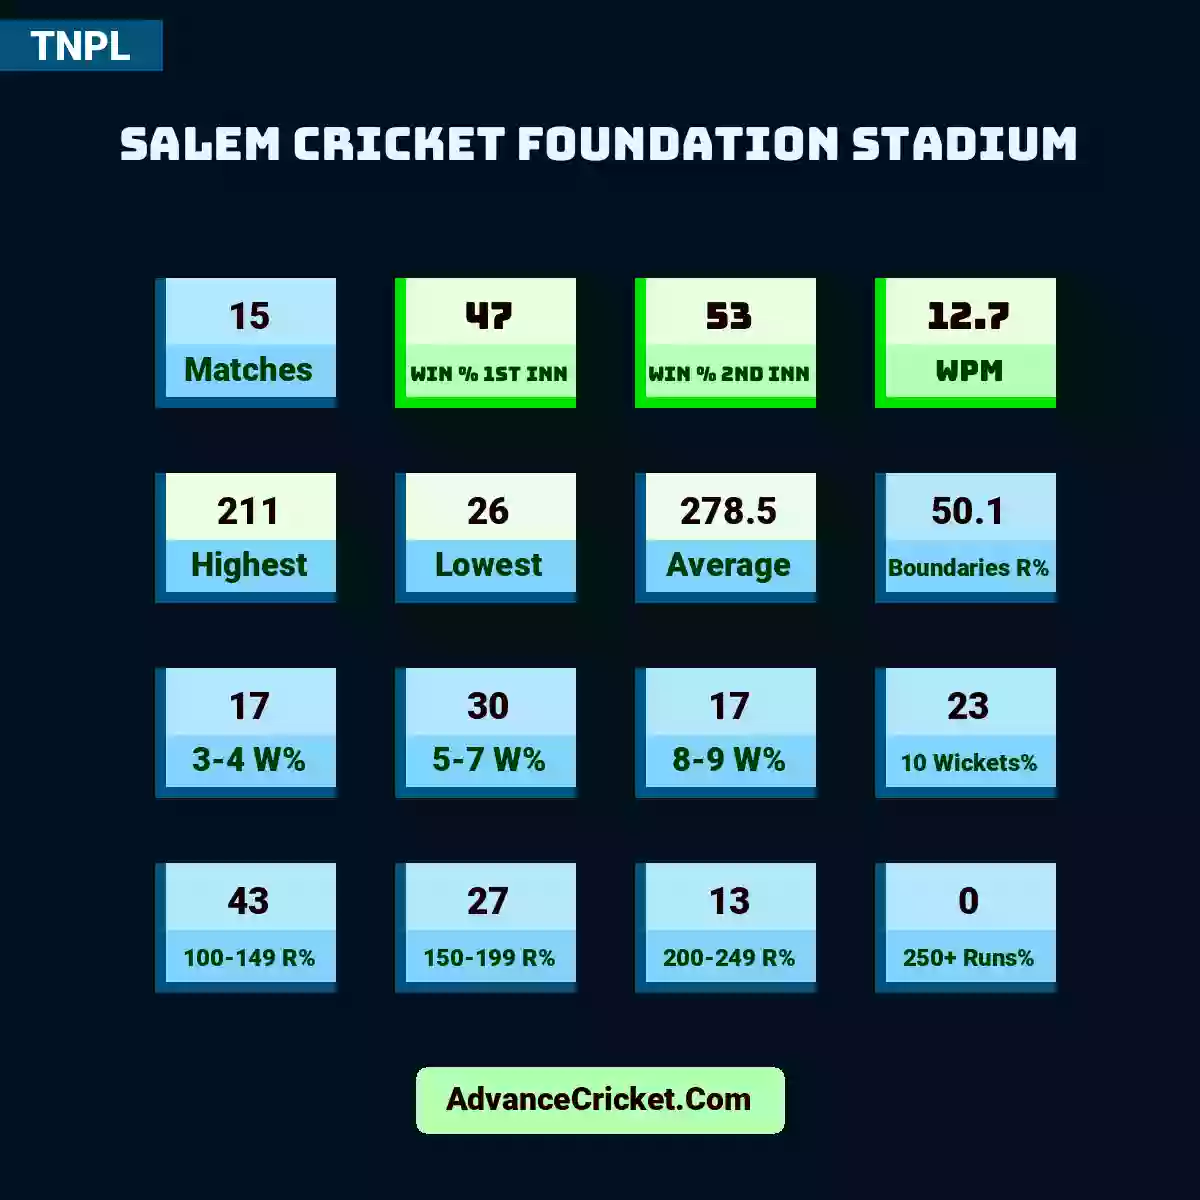 Image showing Salem Cricket Foundation Stadium with Matches: 15, Win % 1st Inn: 47, Win % 2nd Inn: 53, WPM: 12.7, Highest: 211, Lowest: 26, Average: 278.5, Boundaries R%: 50.1, 3-4 W%: 17, 5-7 W%: 30, 8-9 W%: 17, 10 Wickets%: 23, 100-149 R%: 43, 150-199 R%: 27, 200-249 R%: 13, 250+ Runs%: 0.